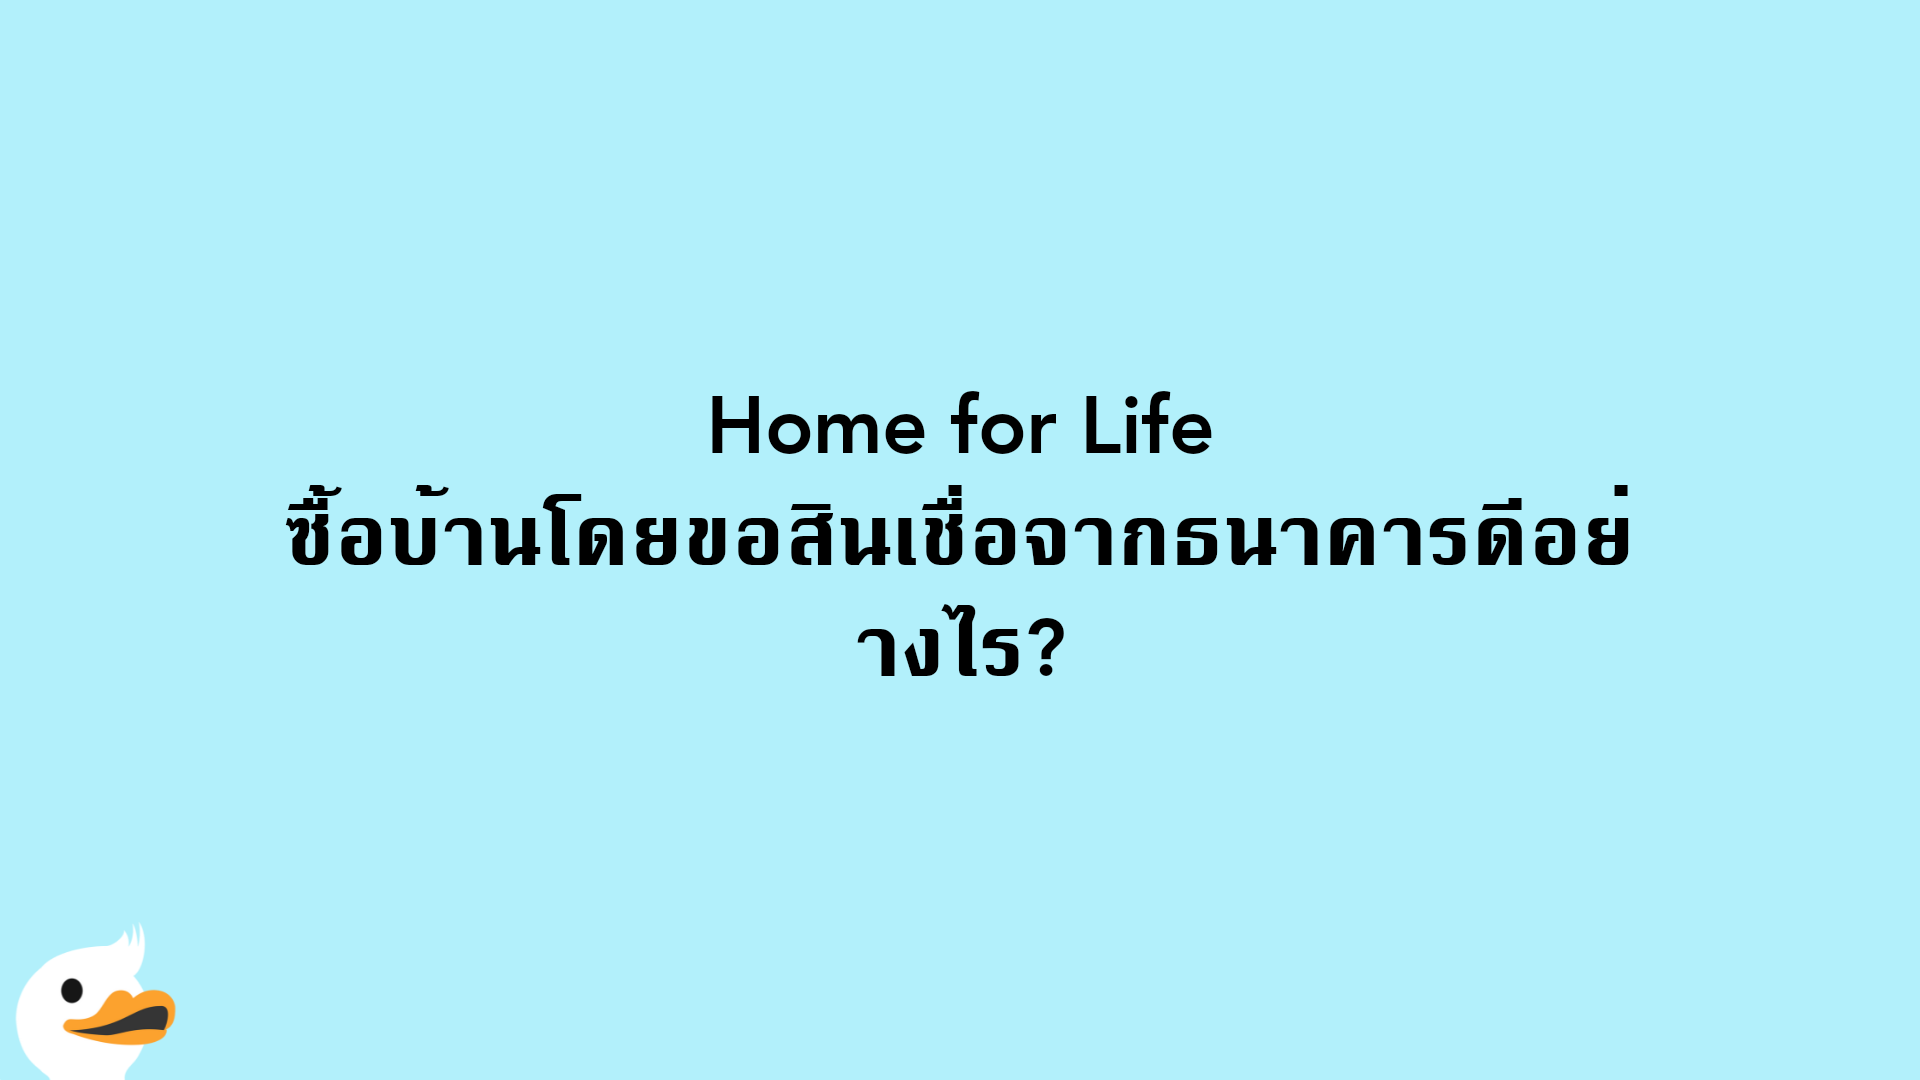 Home for Life ซื้อบ้านโดยขอสินเชื่อจากธนาคารดีอย่างไร?